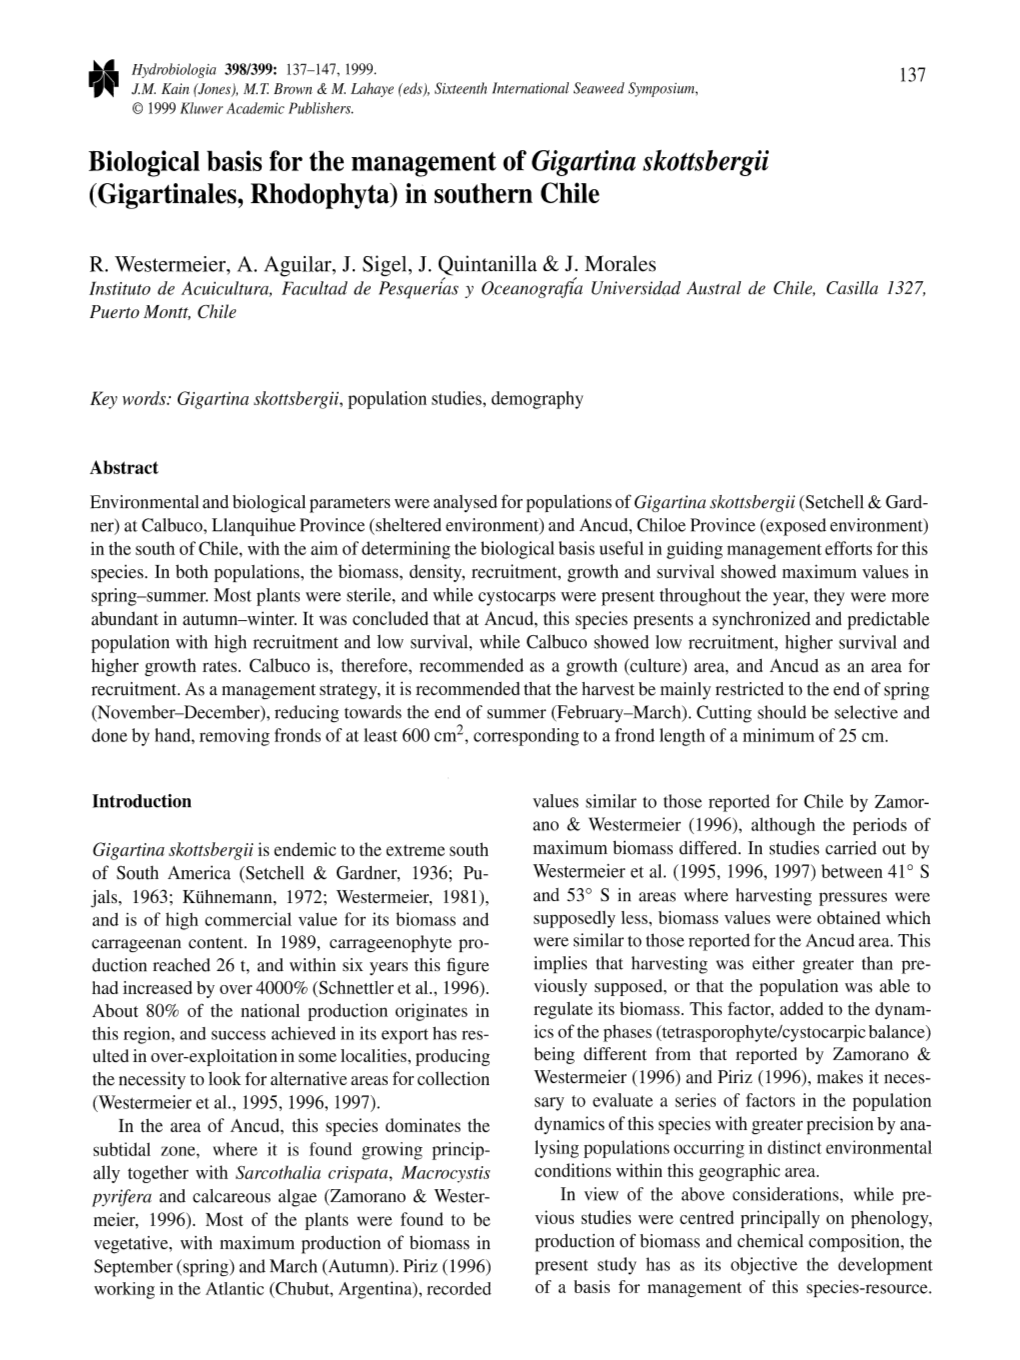 Biological Basis for the Management of Gigartina Skottsbergii (Gigartinales, Rhodophyta) in Southern Chile